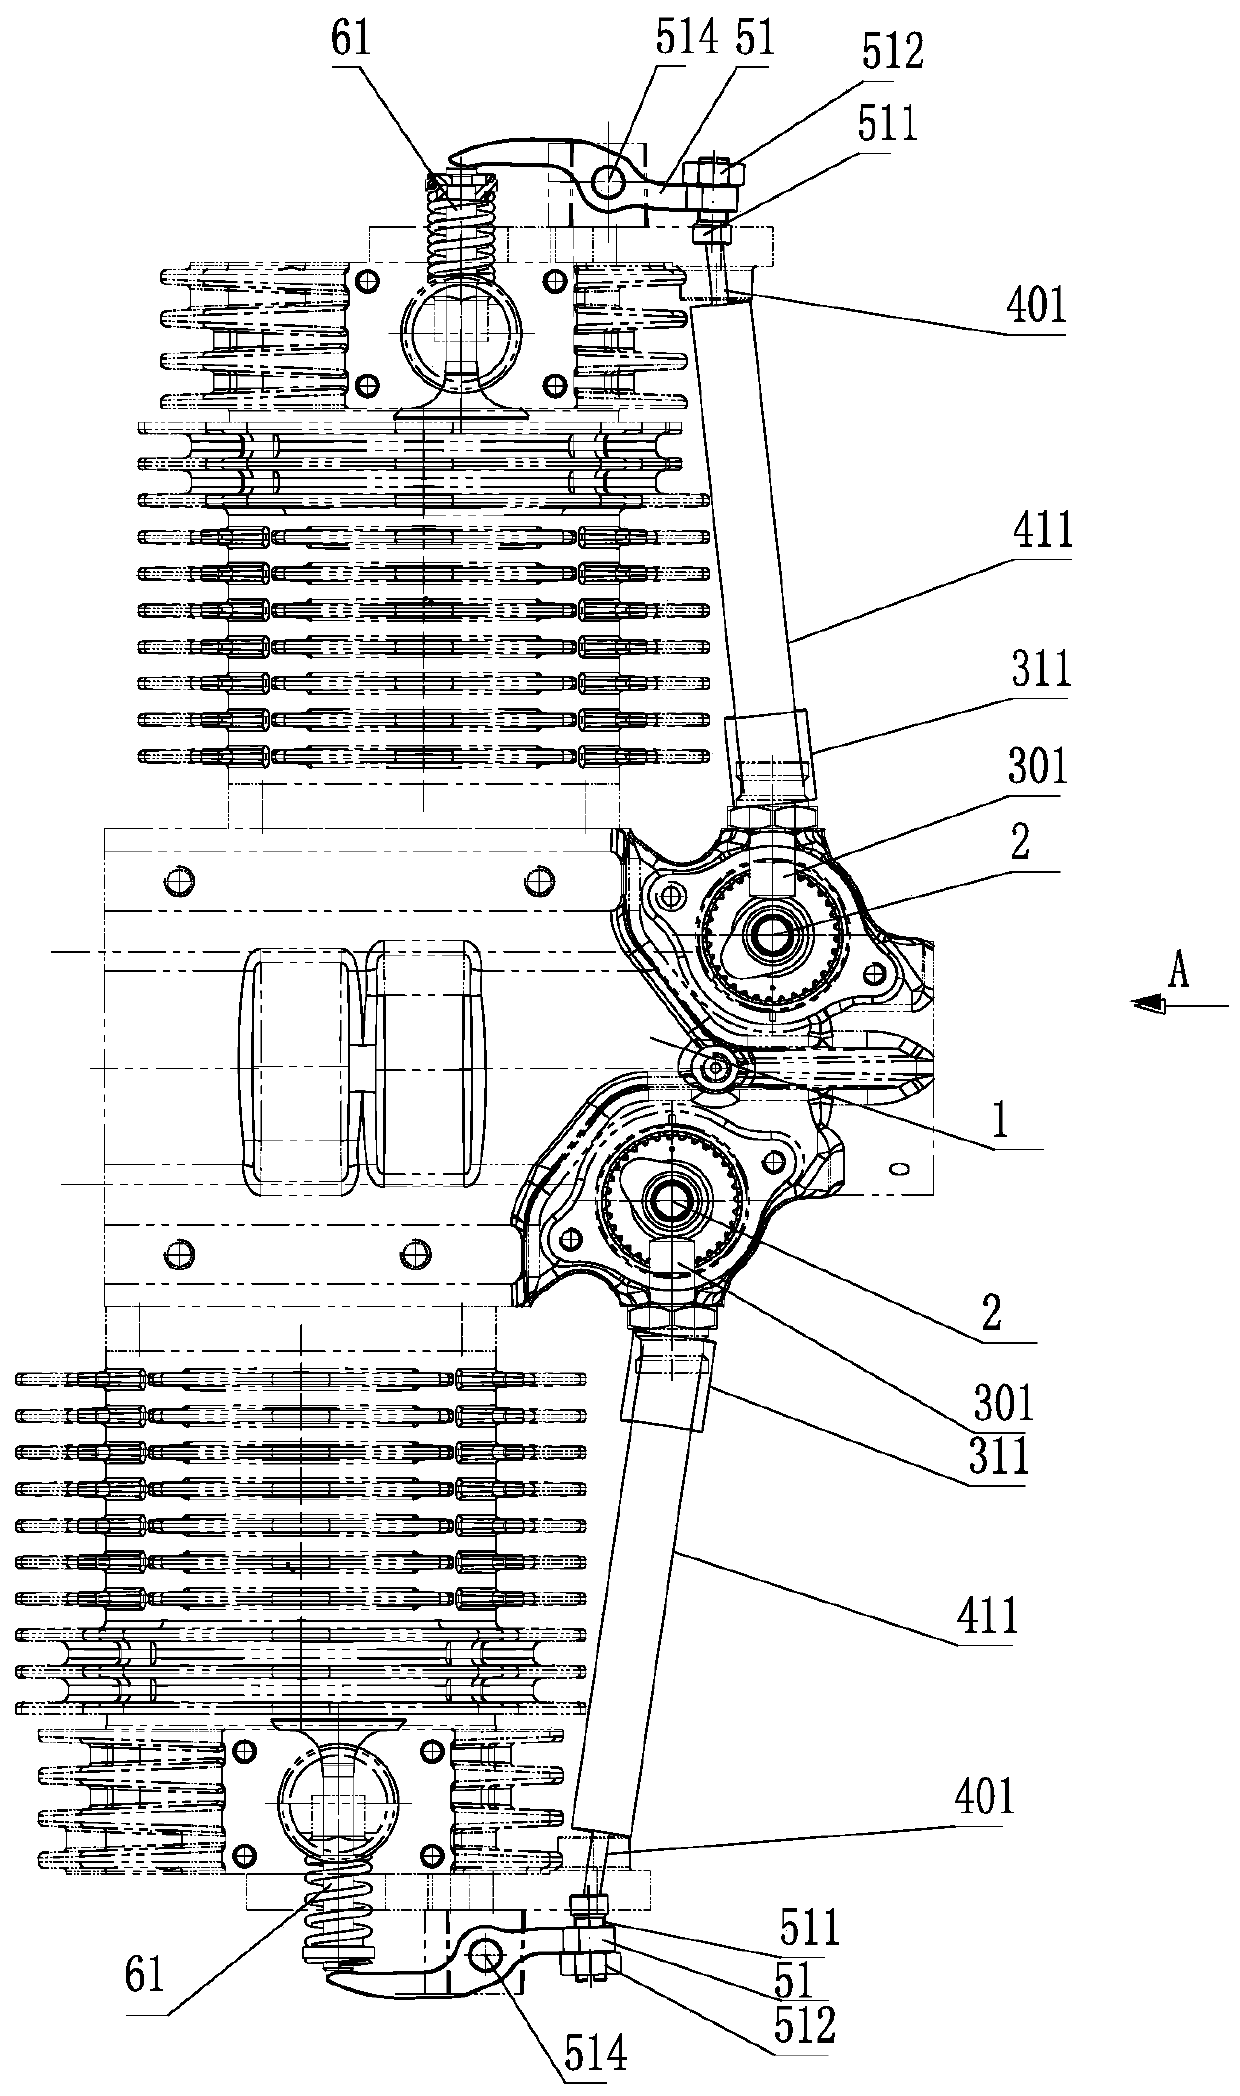 Engine valve mechanism and horizontally opposed double-cylinder engine